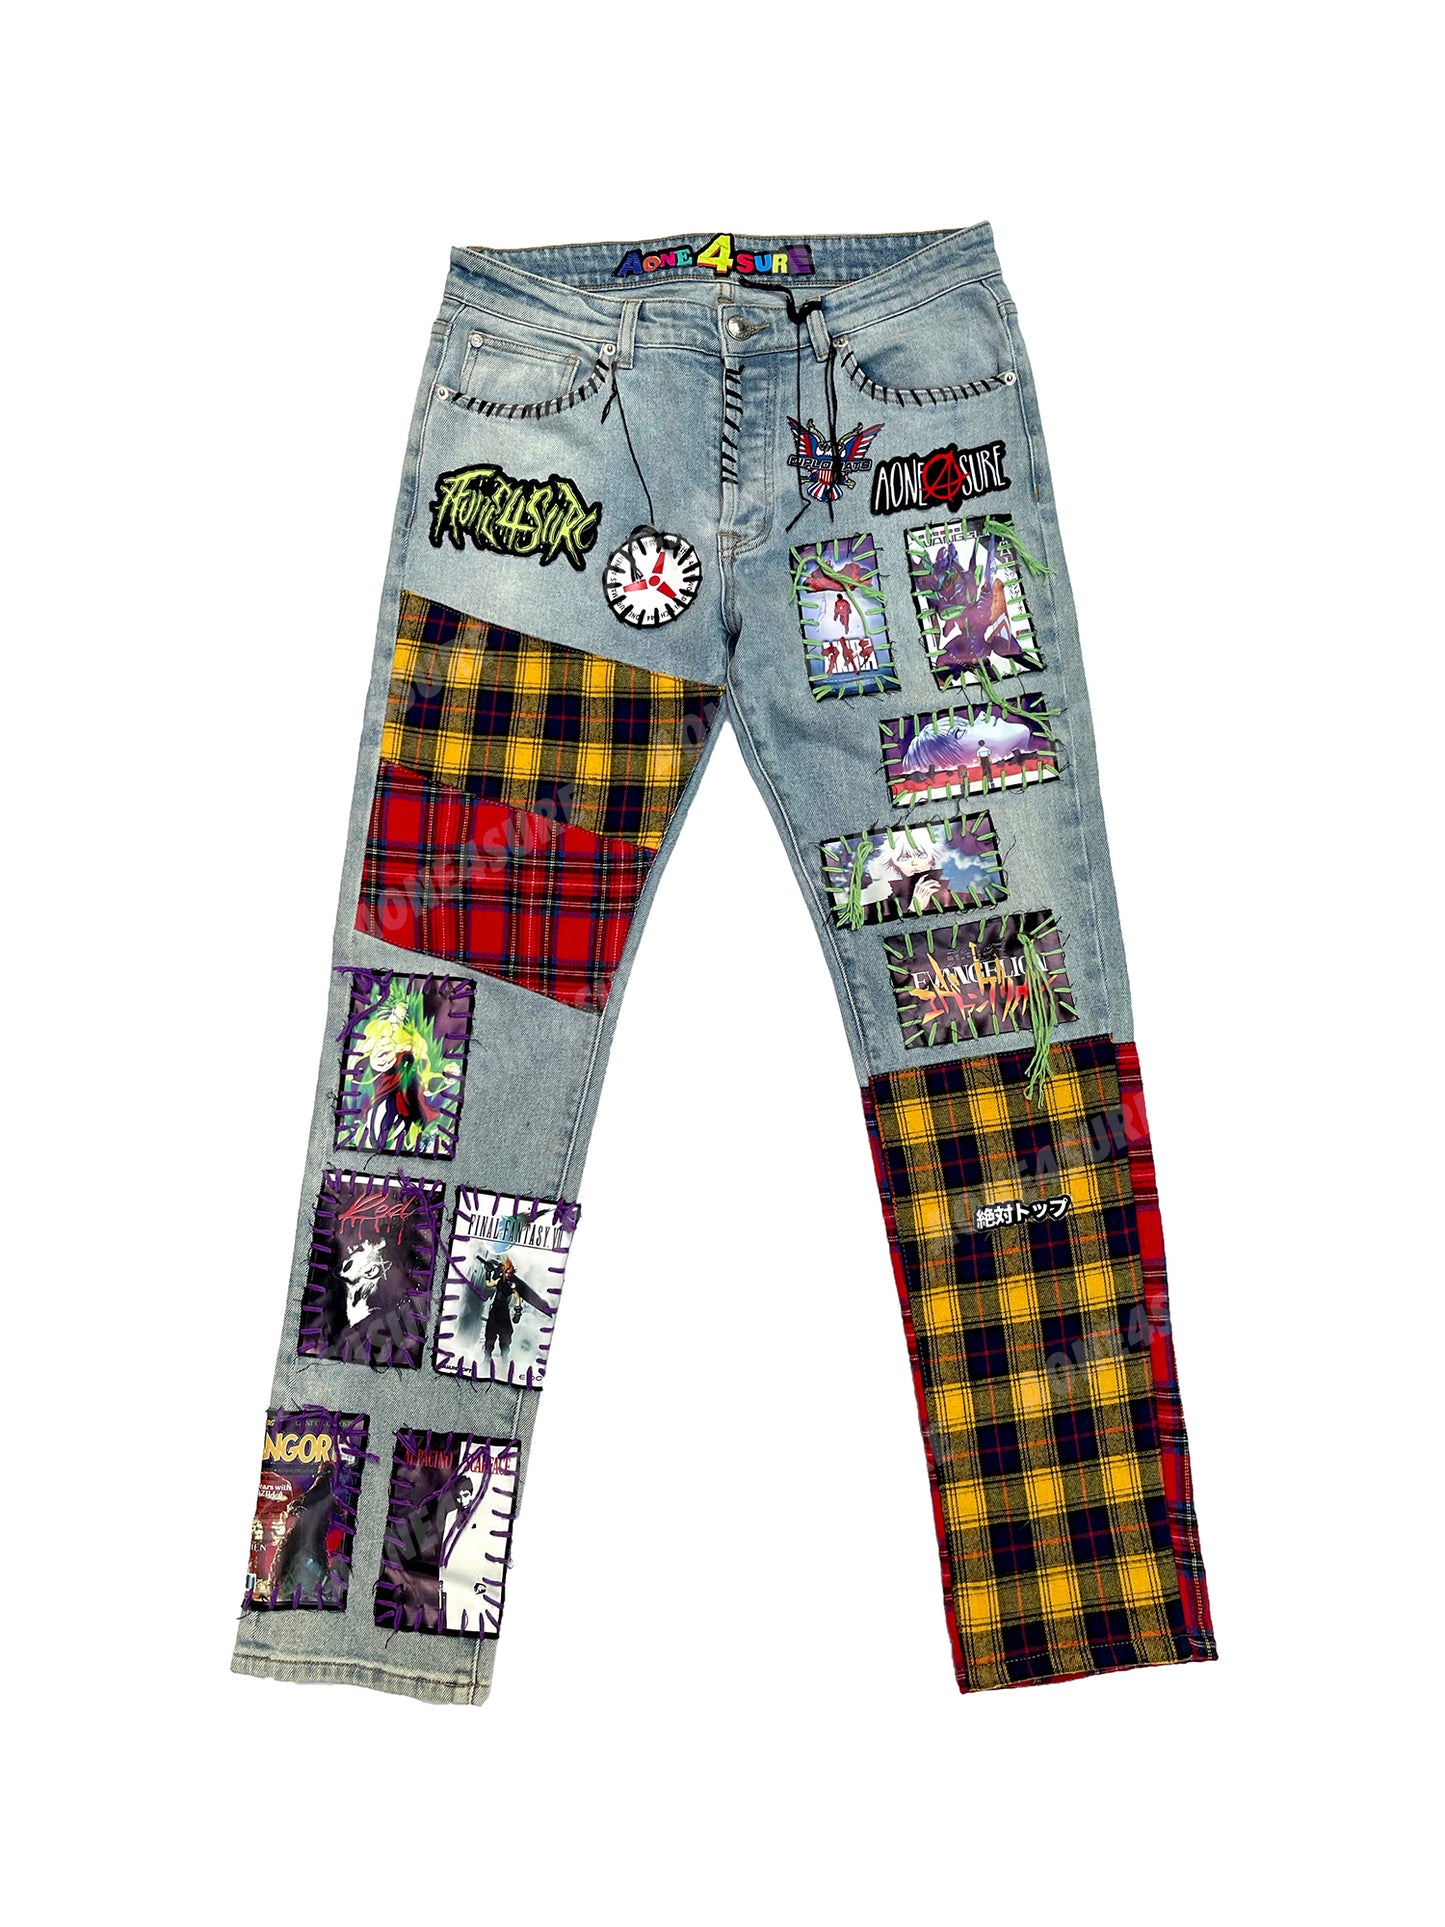 AONE4SURE Rockstar Jeans